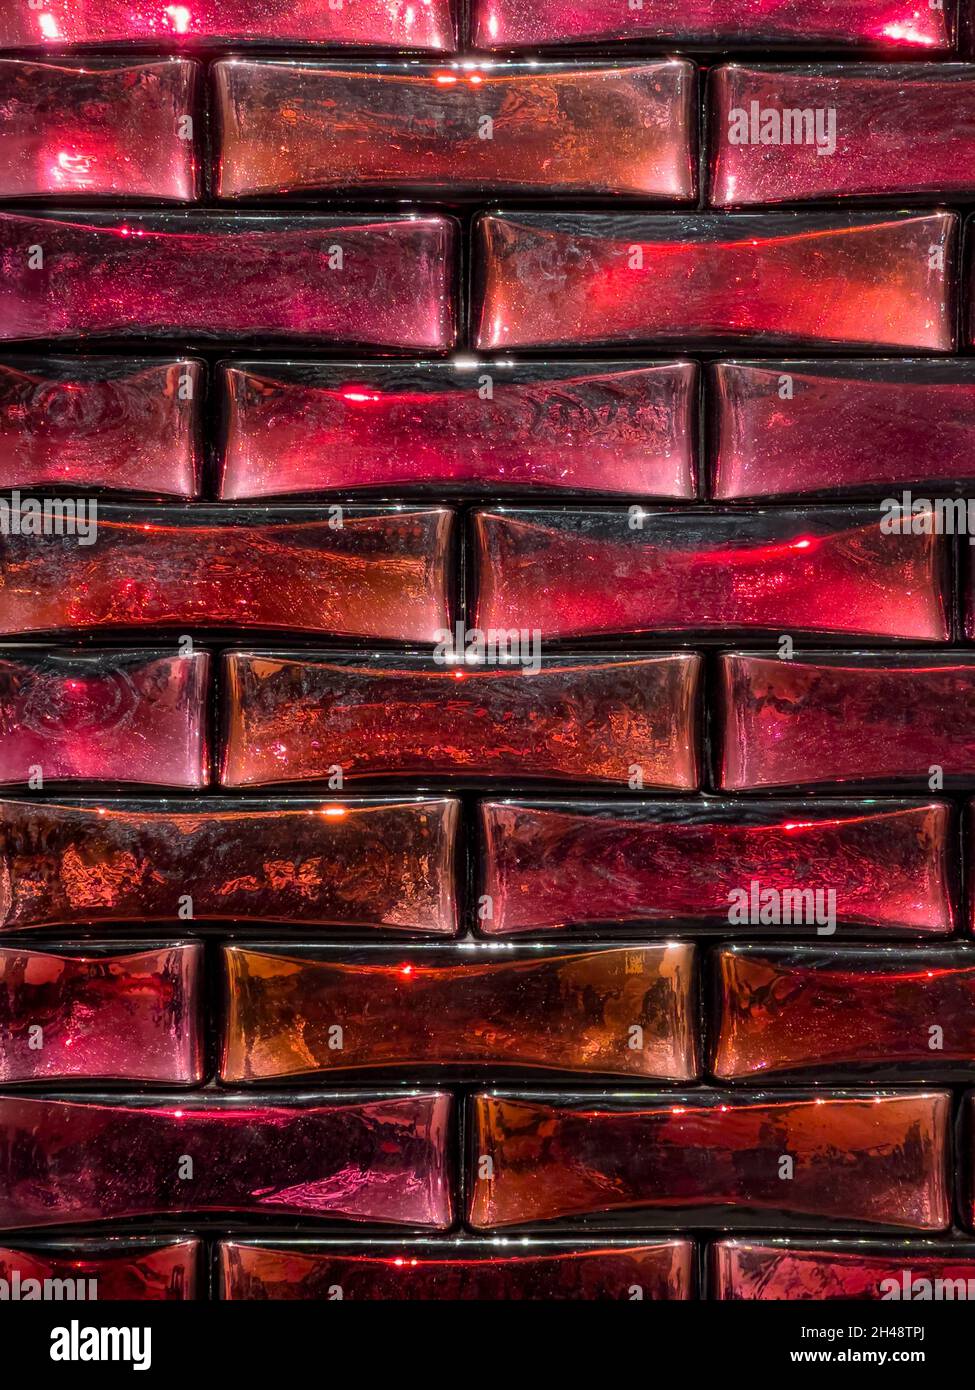 Red glass bricks, abstract illustration - stock illustration Stock Photo